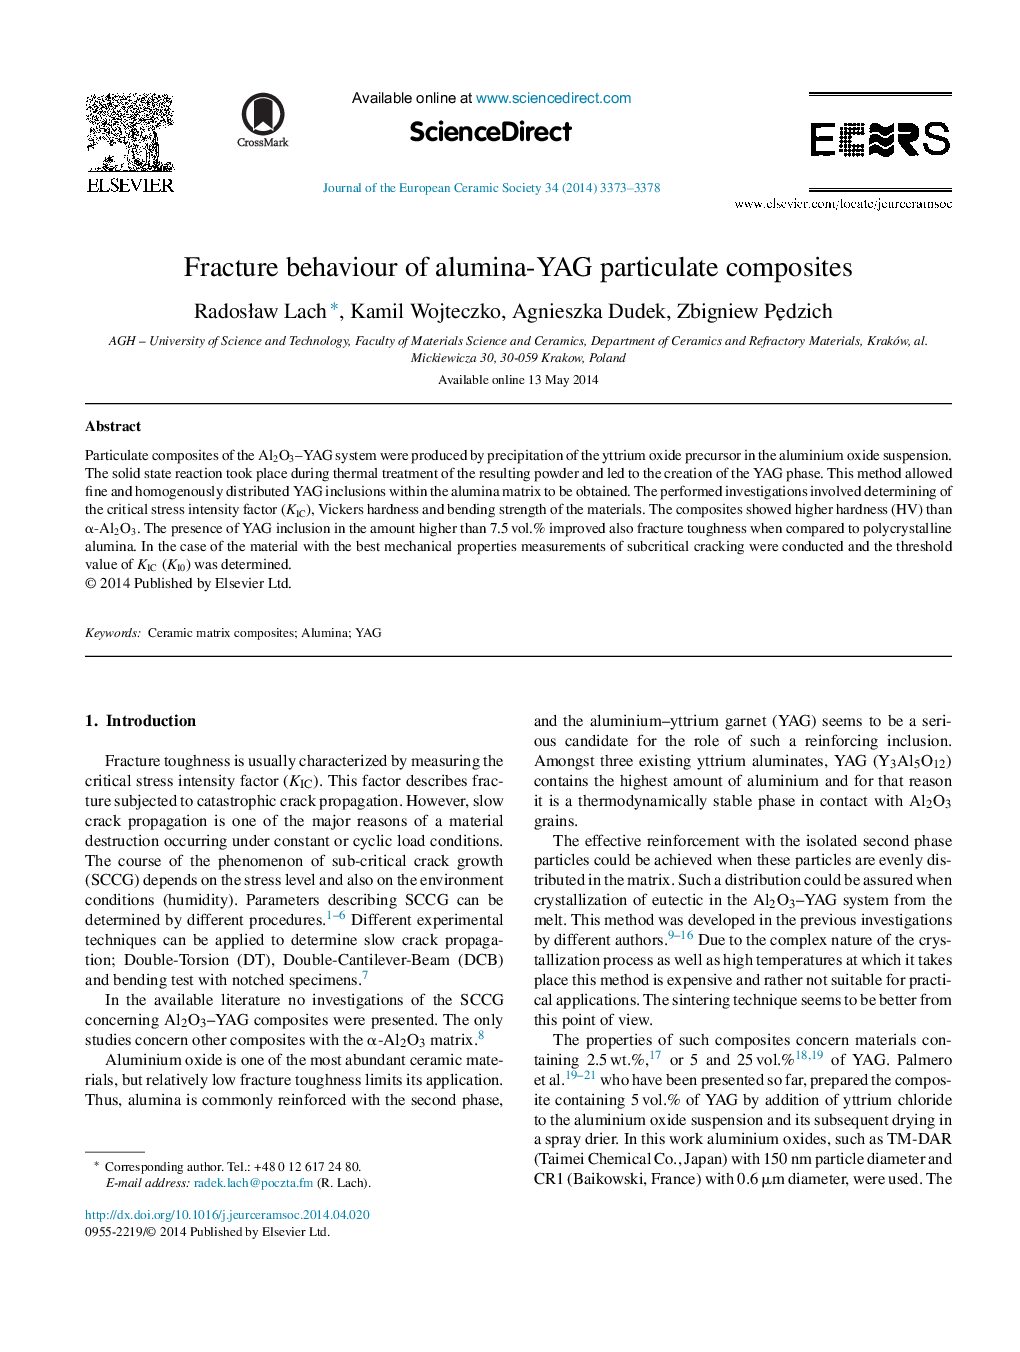 Fracture behaviour of alumina-YAG particulate composites